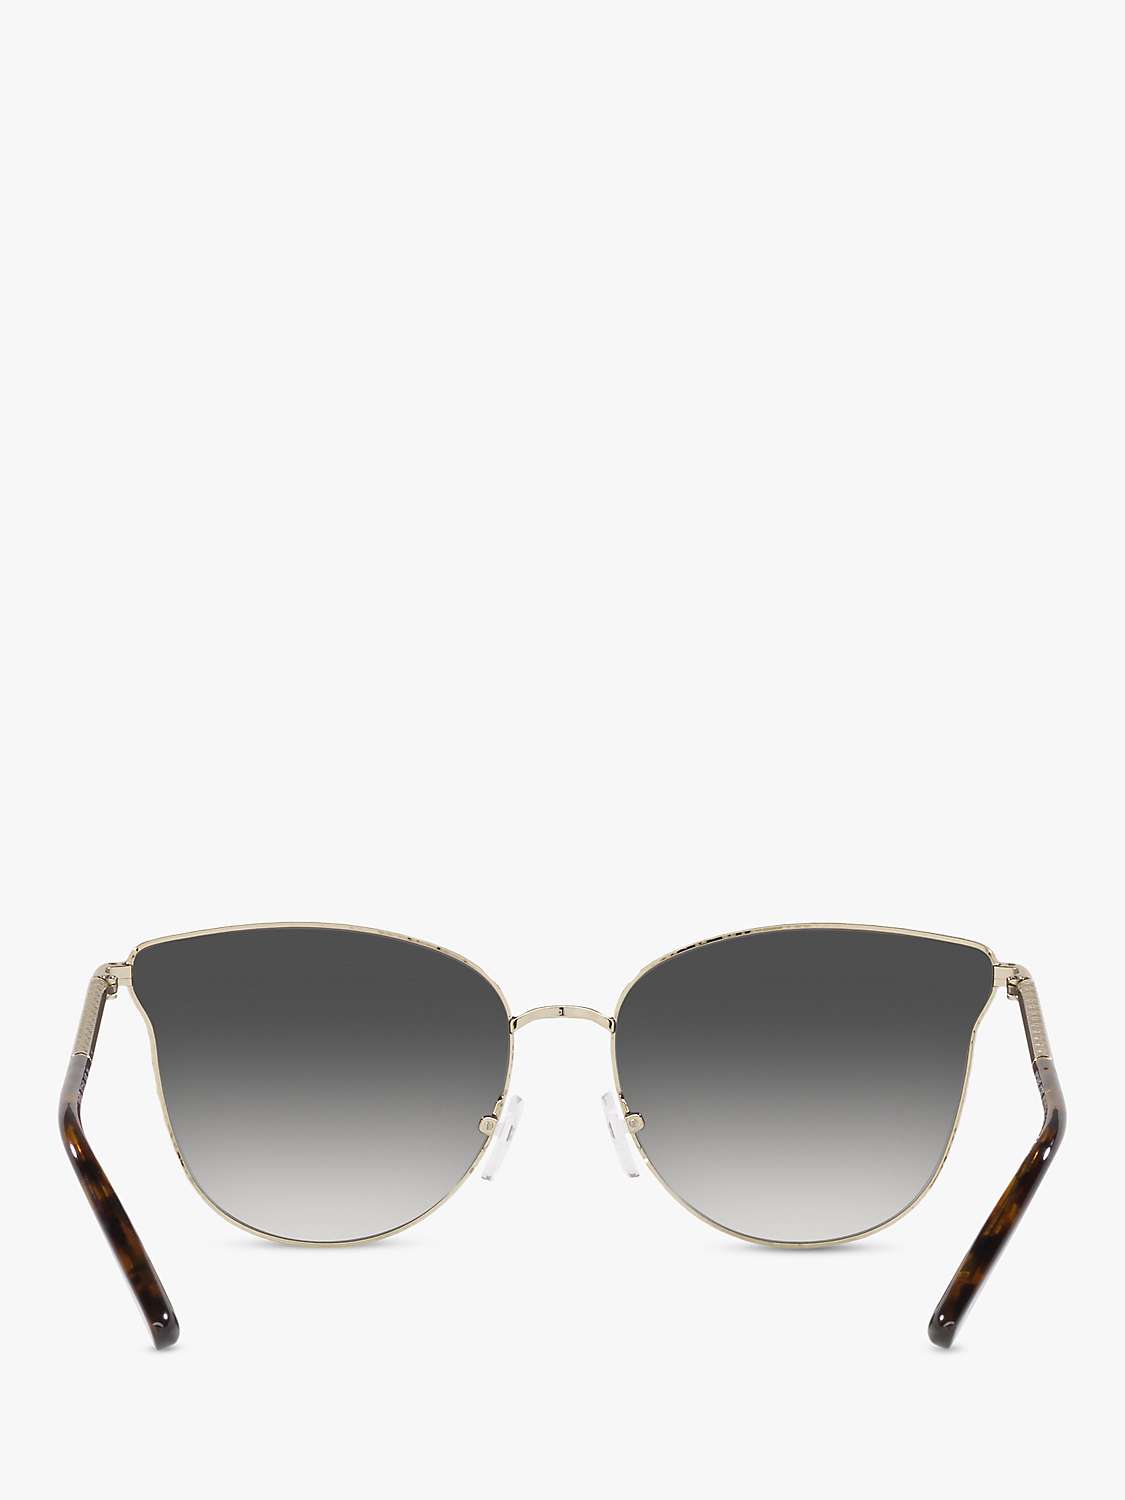 Buy Michael Kors MK1120 Women's Salt Lake City Round Sunglasses, Gold/Grey Gradient Online at johnlewis.com